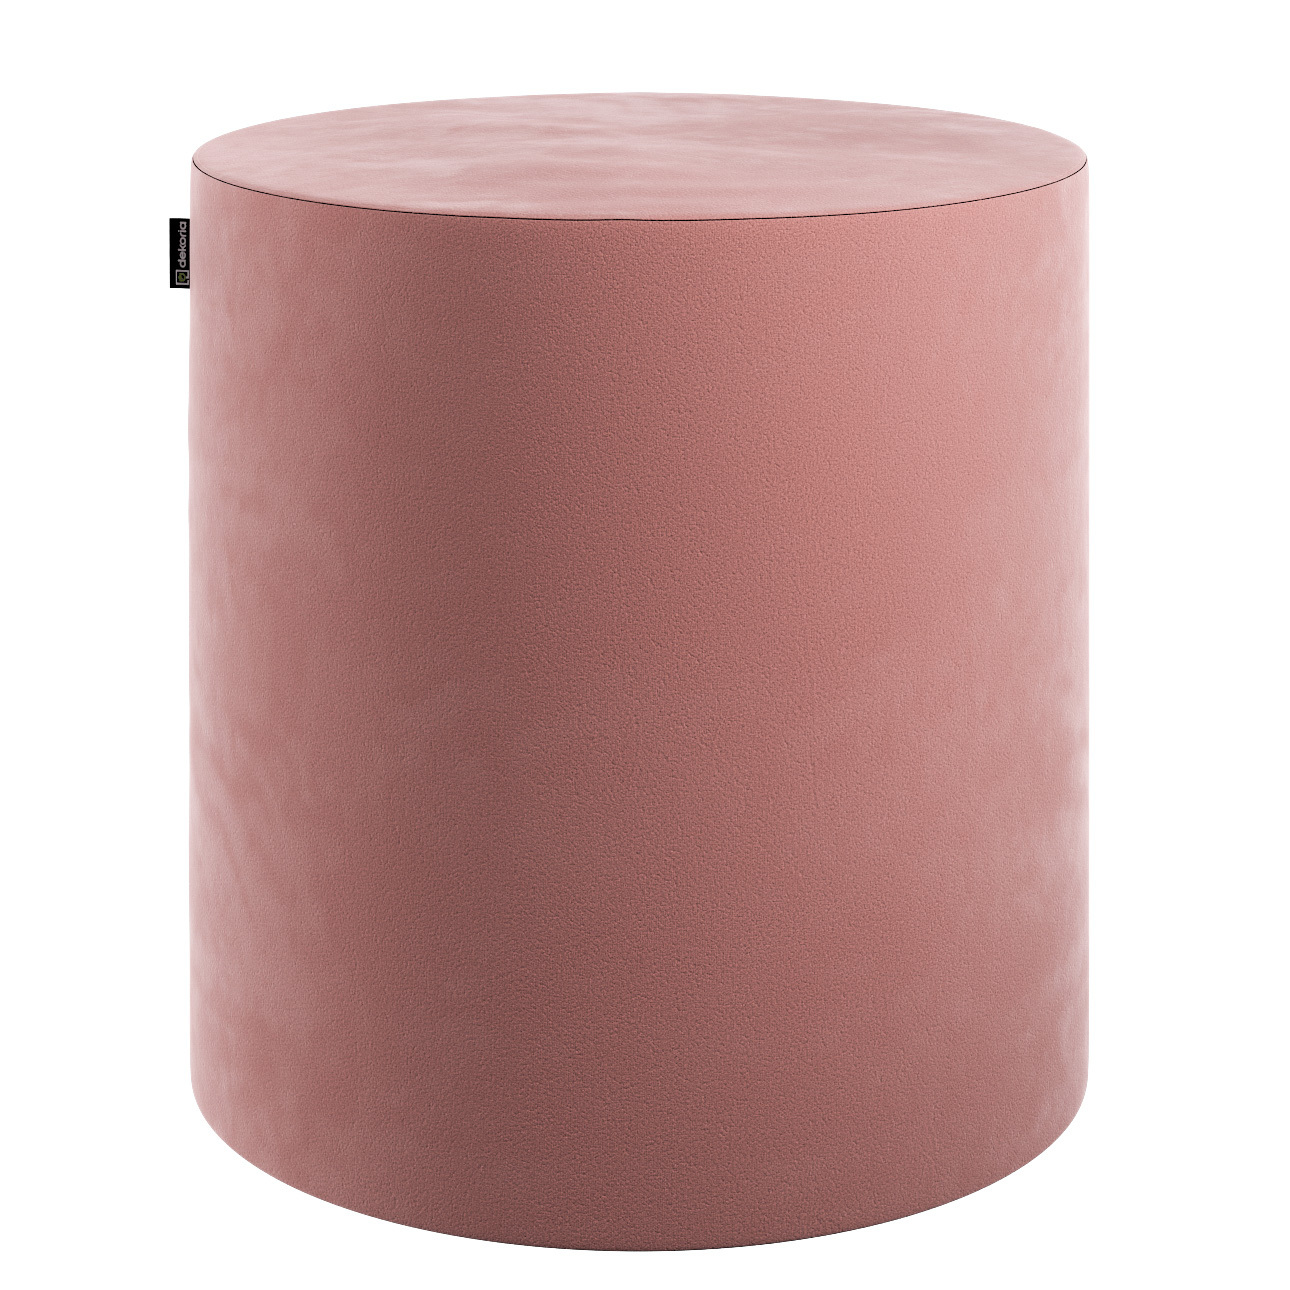 Pouf Barrel, koralle, ø40 cm x 40 cm, Velvet (704-30) günstig online kaufen